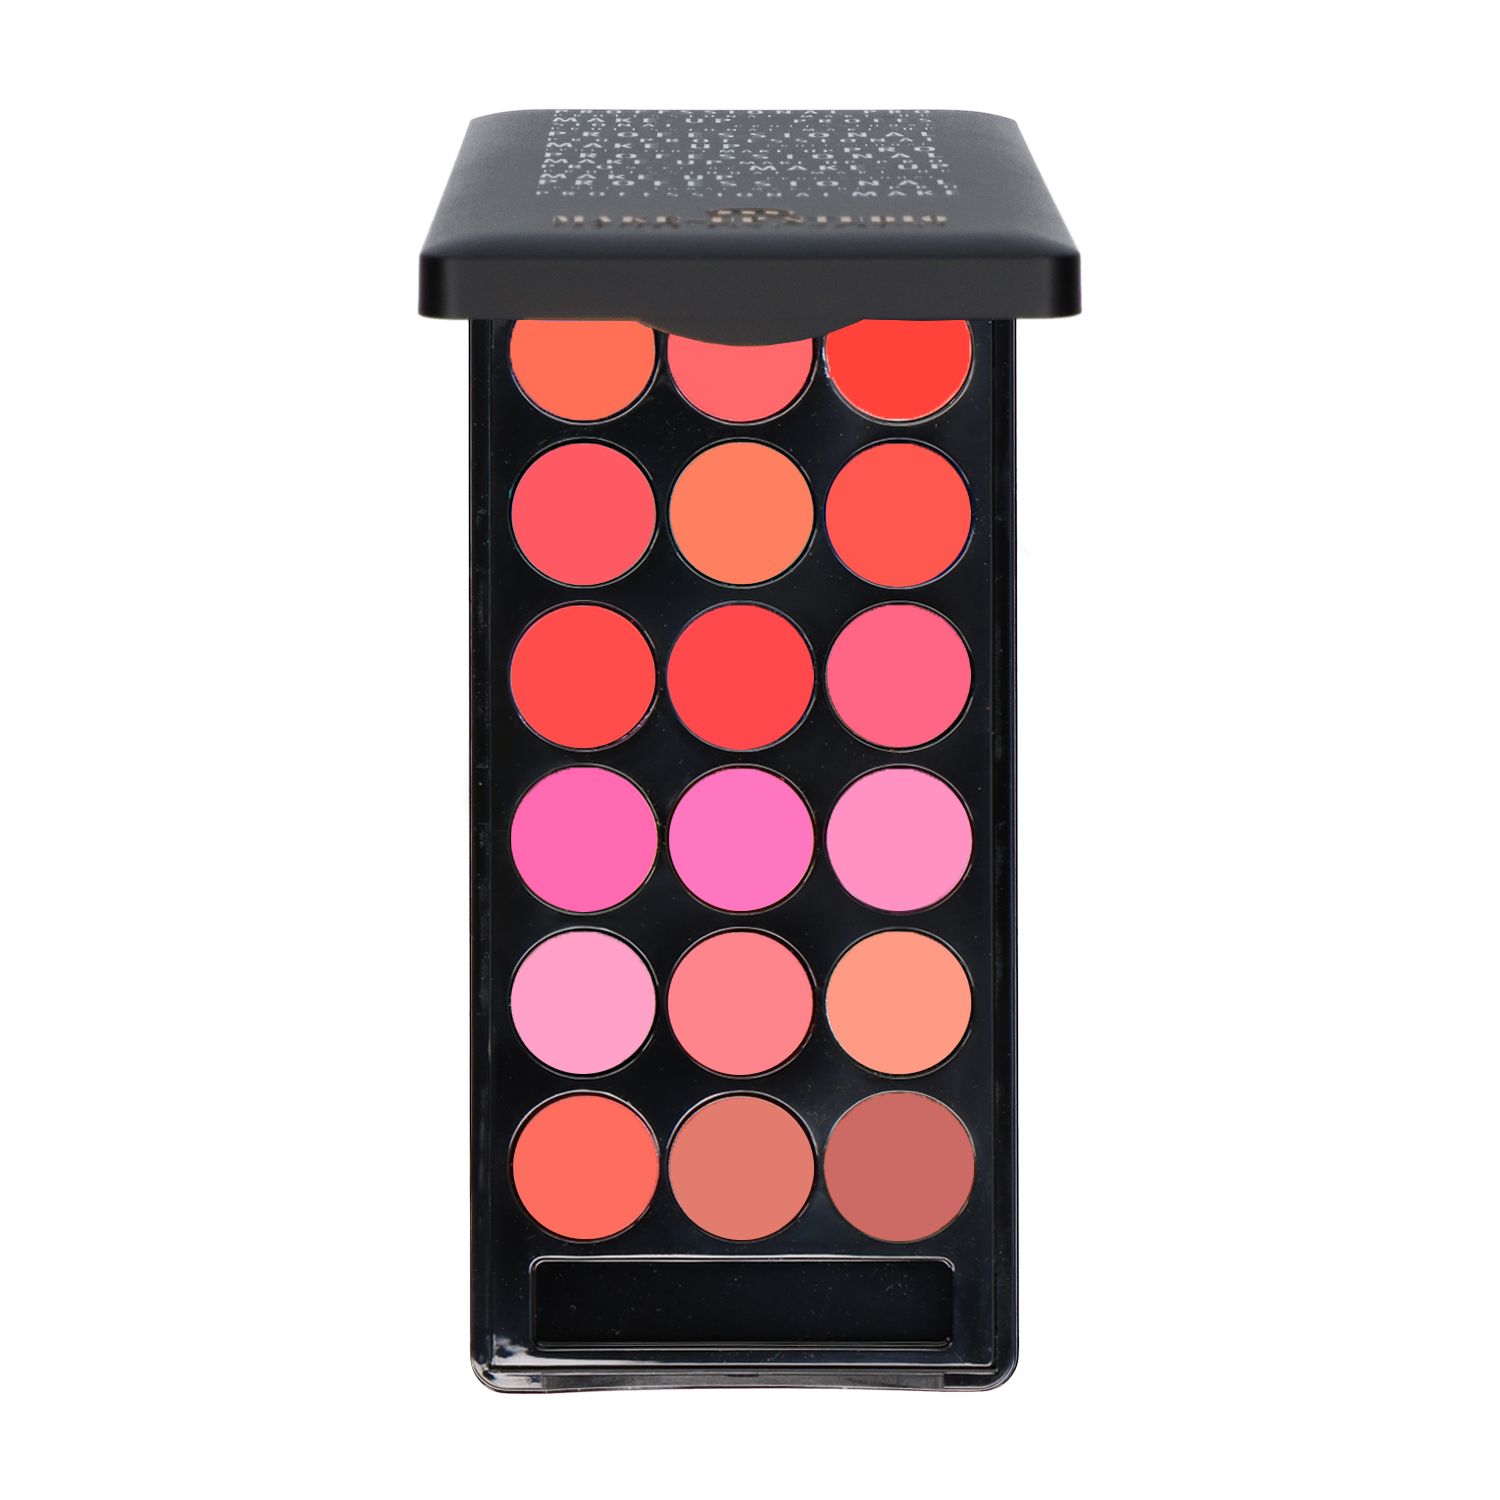 Lipcolourbox Lip palette met 18 kleuren- 4